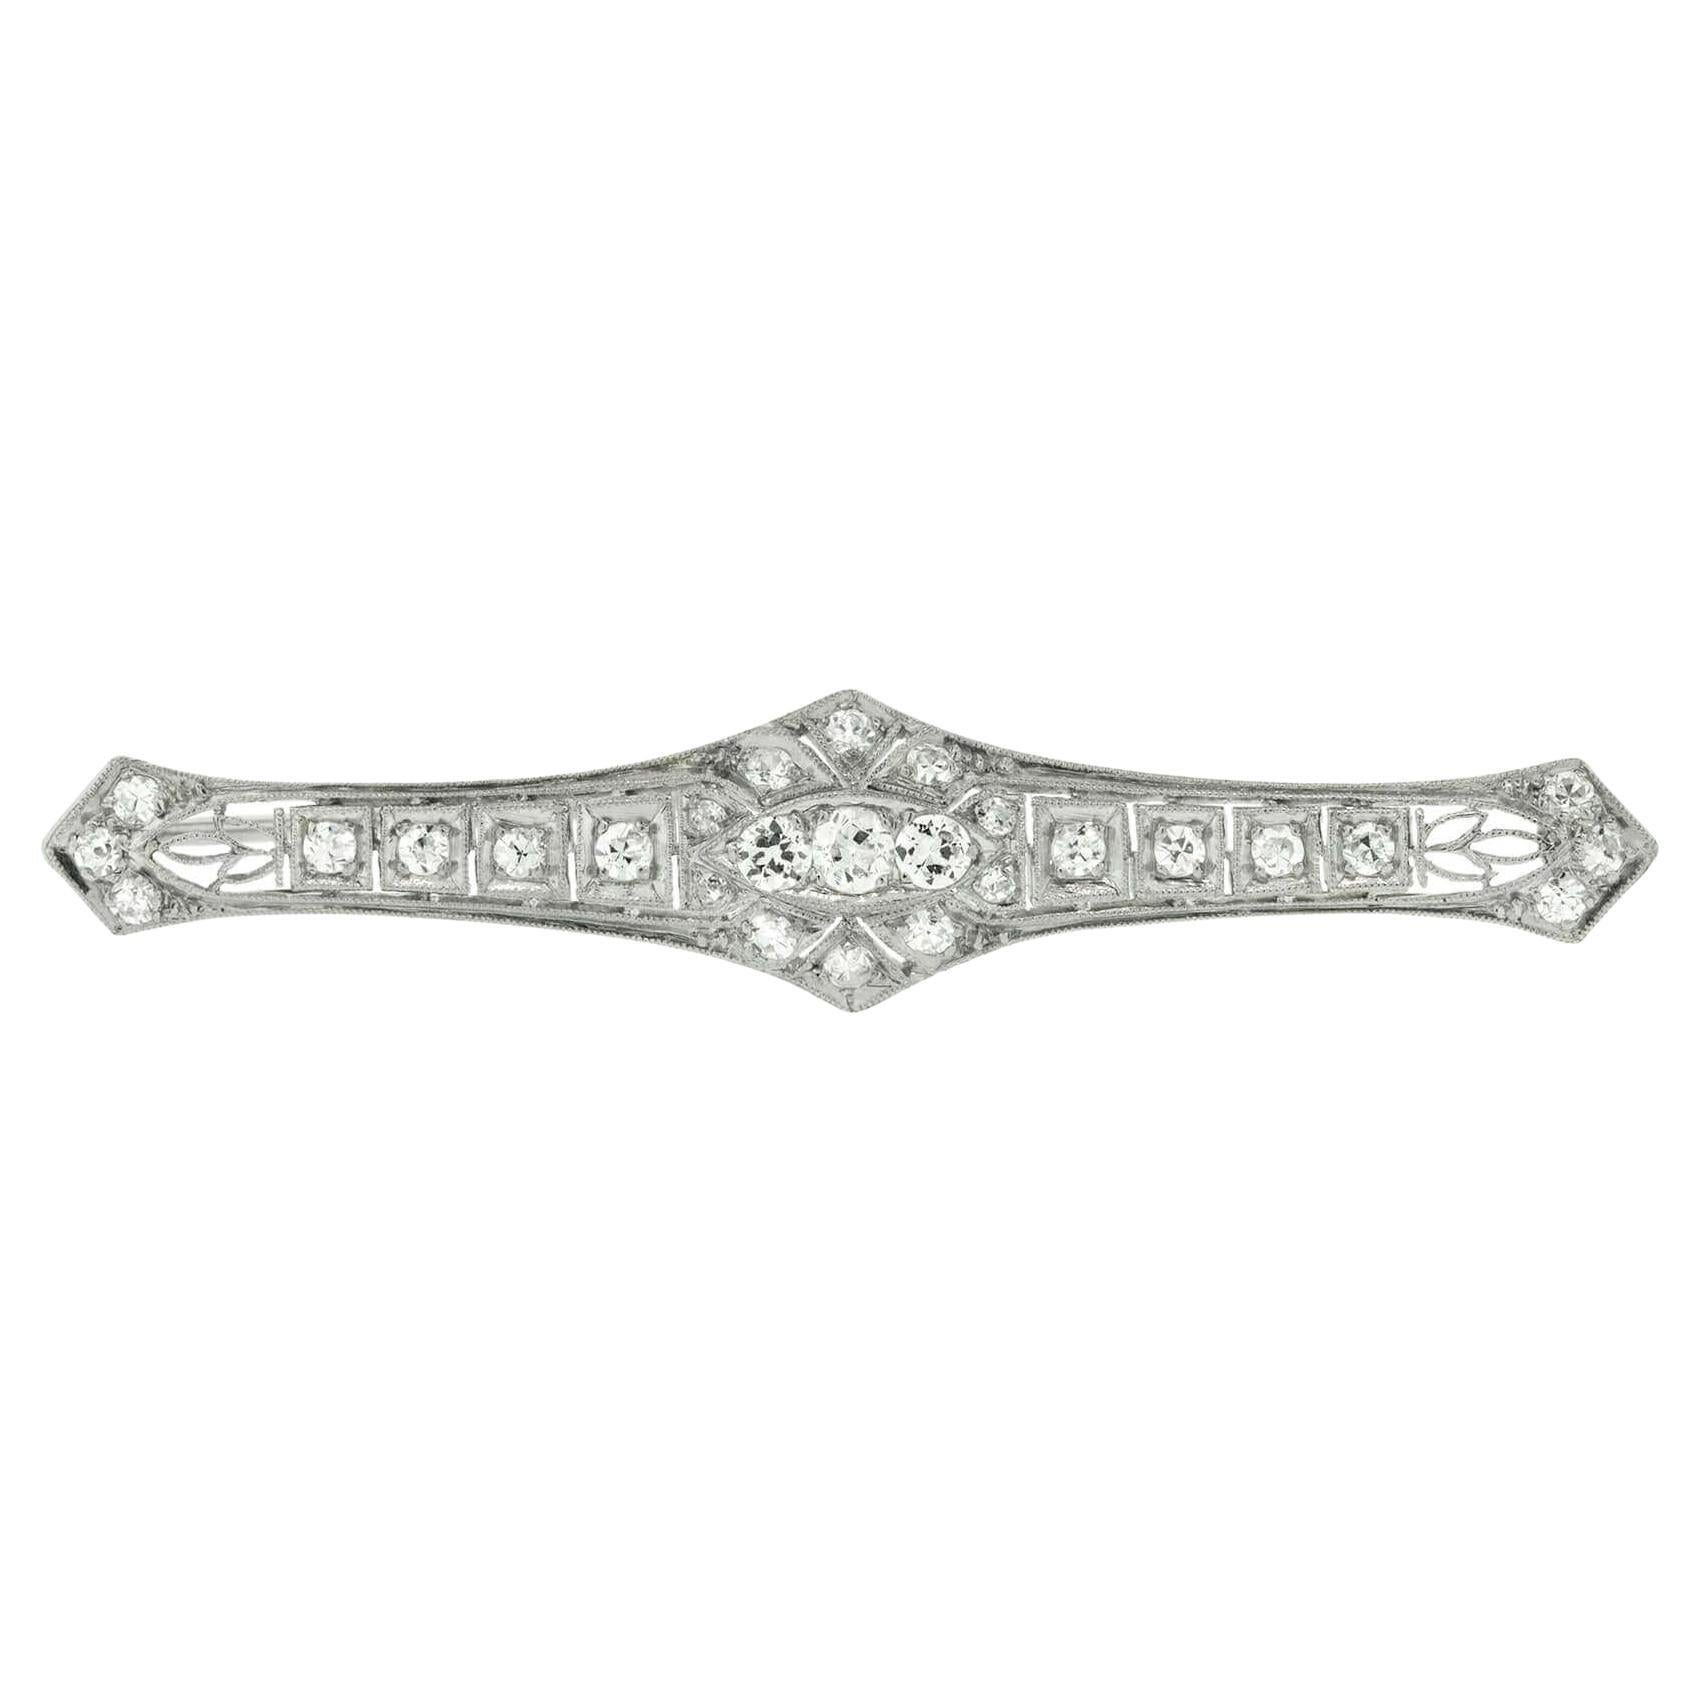 Art Deco Diamond Brooch with 0.95ct of Diamonds, Circa 1920-1930's, Platinum